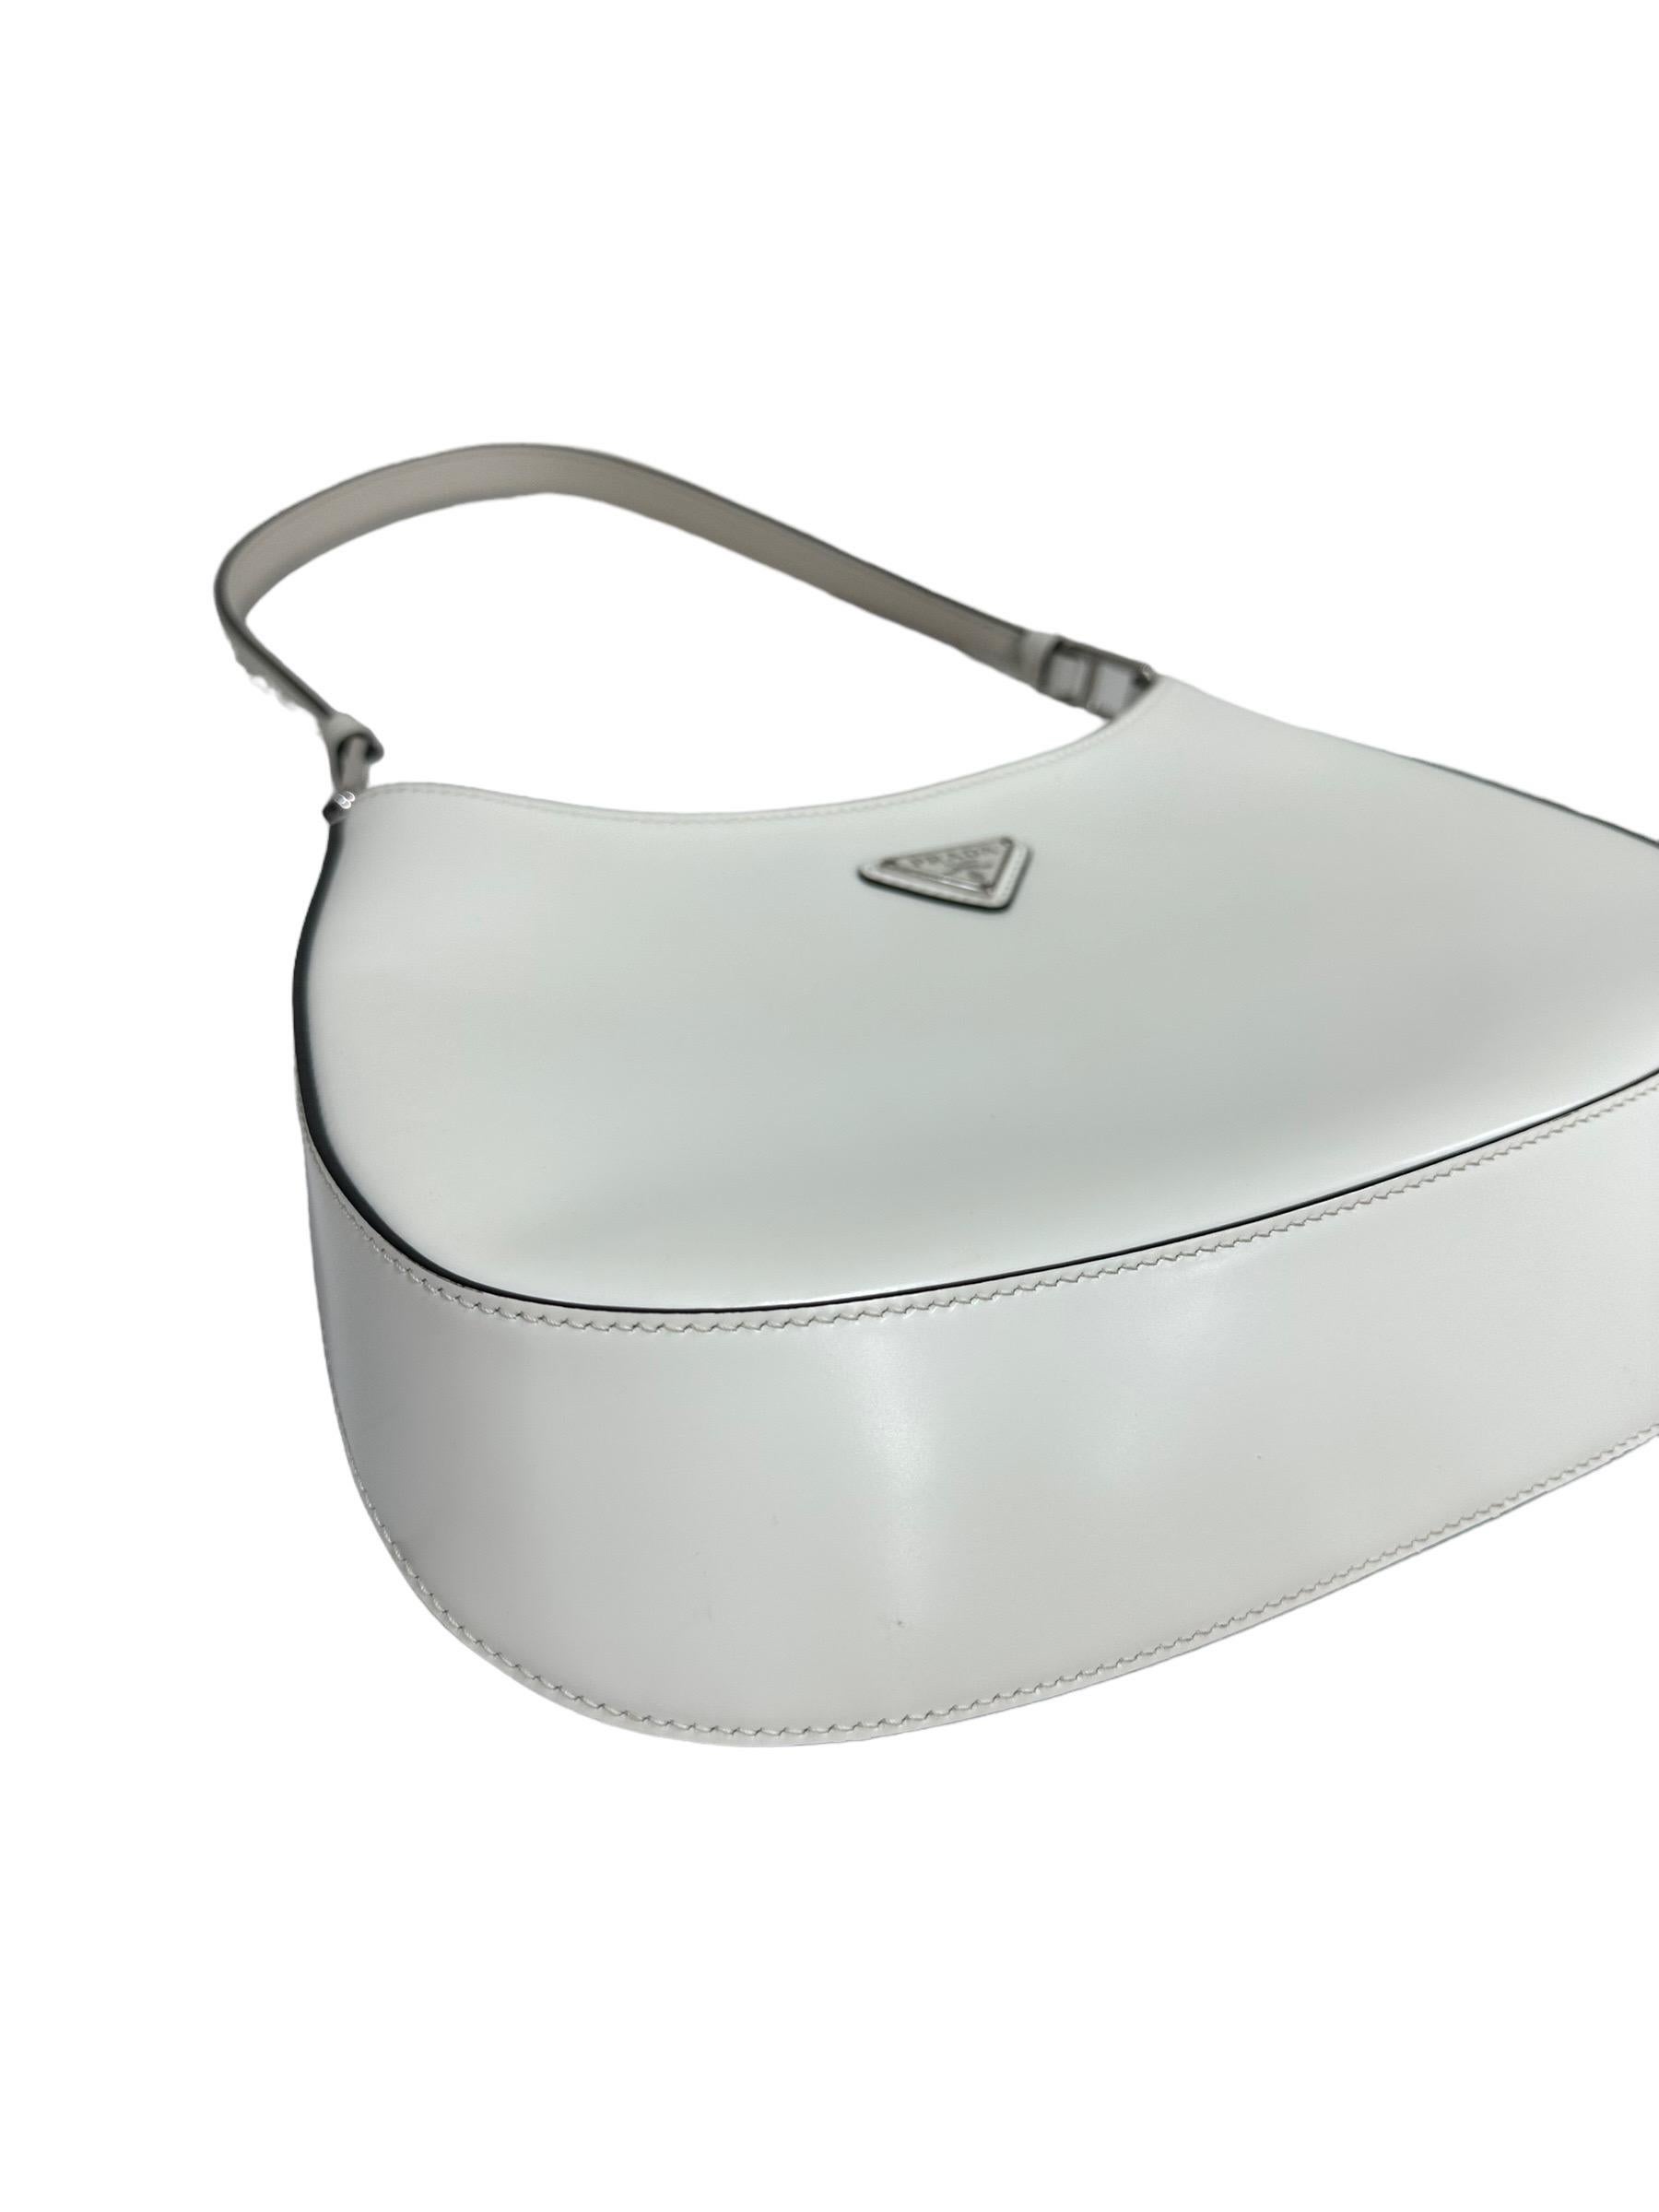 Prada Cleo White Leather Shoulder Bag 6